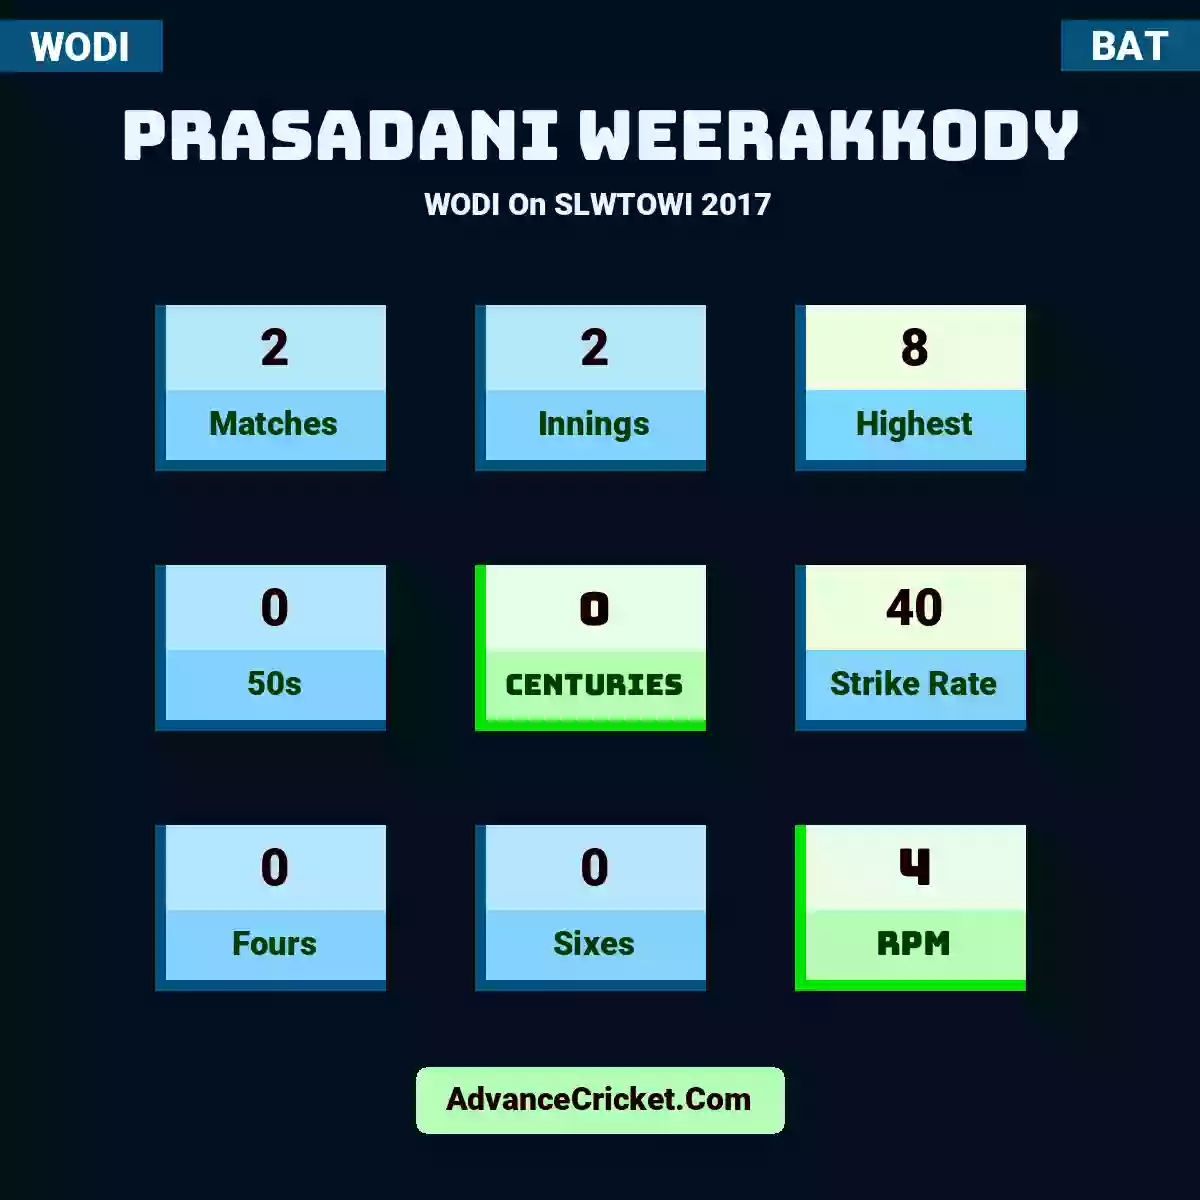 Prasadani Weerakkody WODI  On SLWTOWI 2017, Prasadani Weerakkody played 2 matches, scored 8 runs as highest, 0 half-centuries, and 0 centuries, with a strike rate of 40. P.Weerakkody hit 0 fours and 0 sixes, with an RPM of 4.